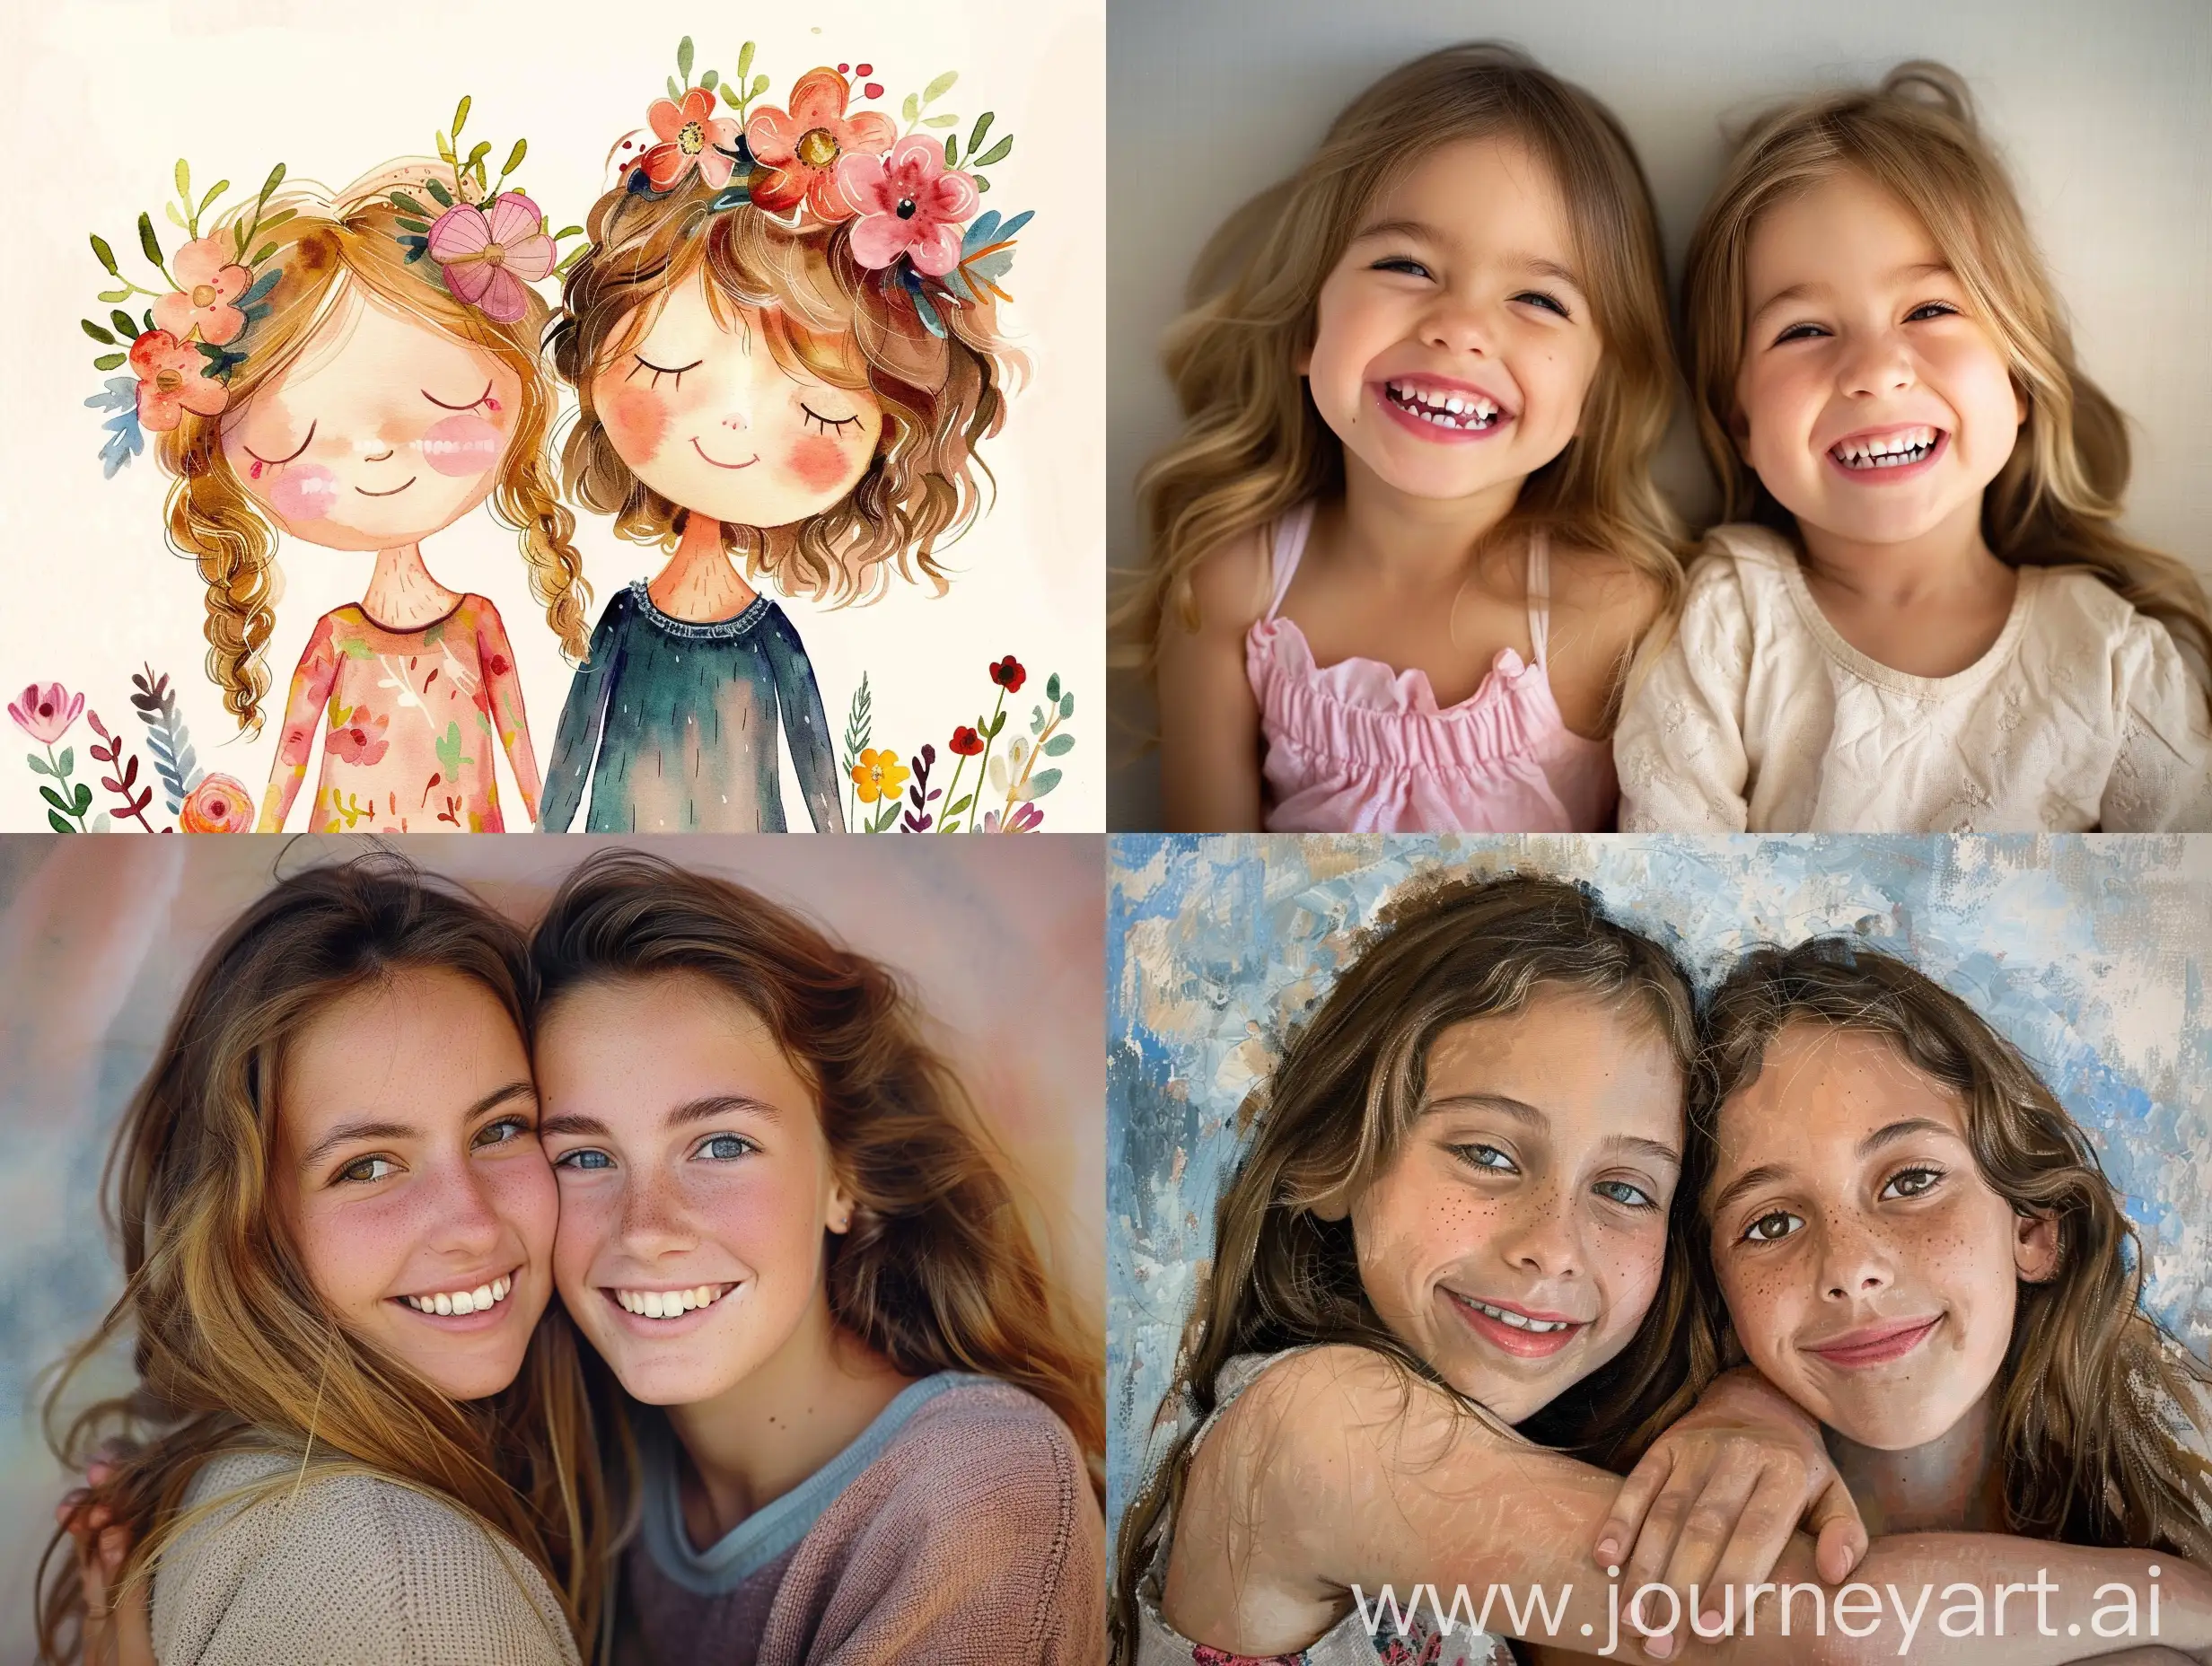 Joyful-Sisters-Embracing-in-Portrait-Aspect-Ratio